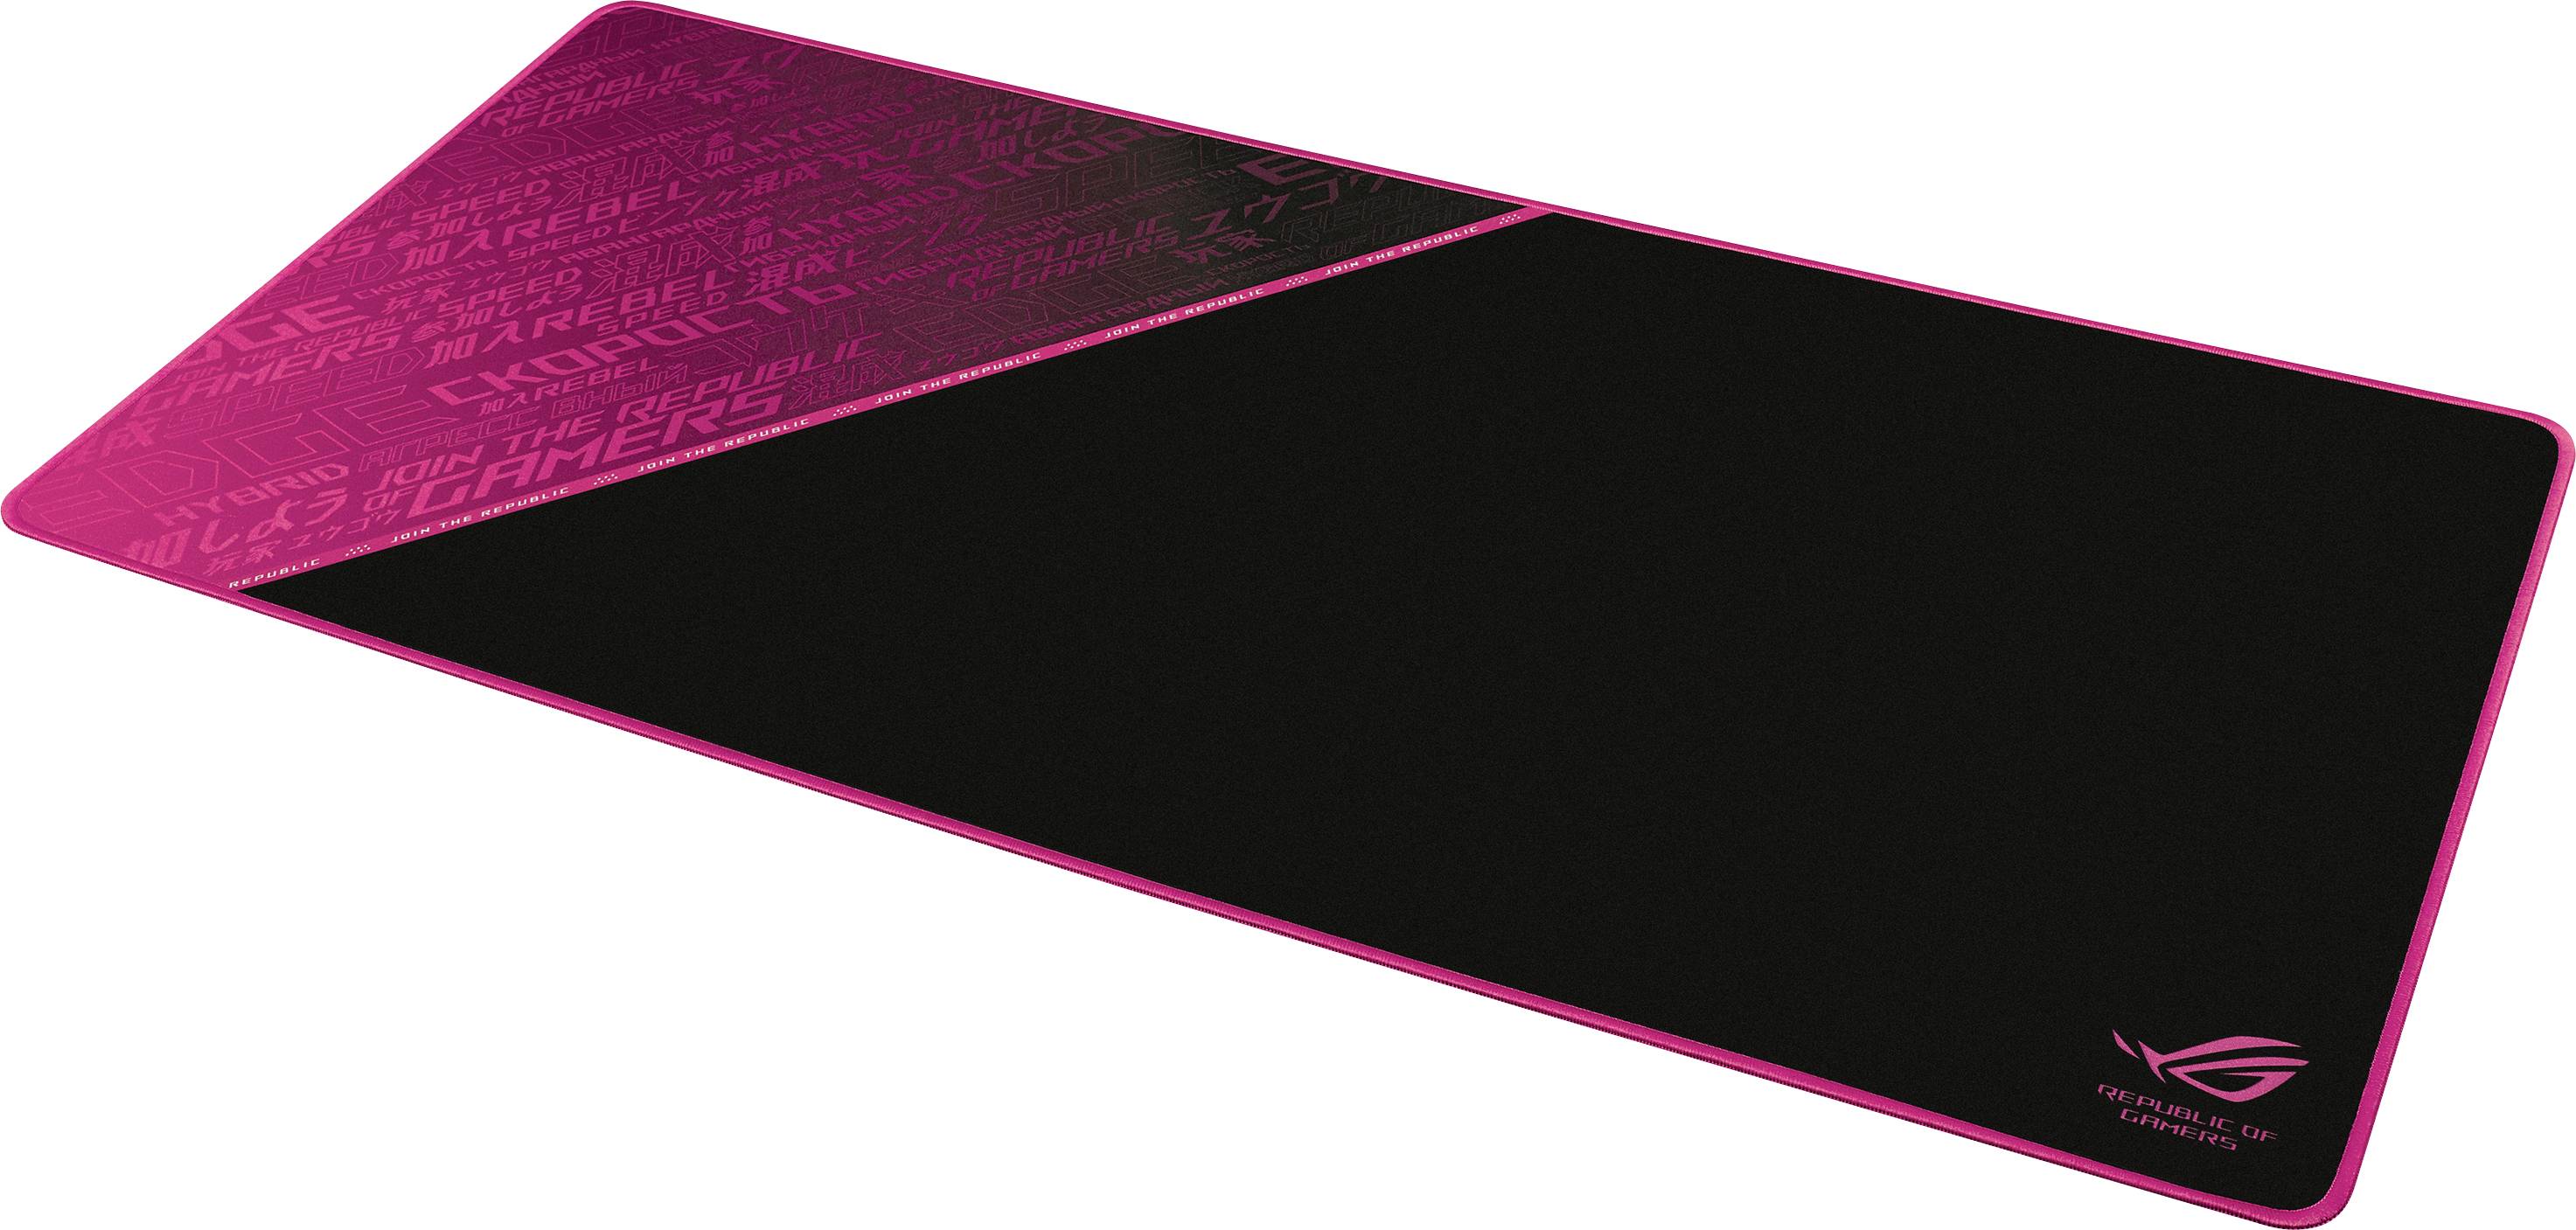 ASUS ROG Sheath Electro Punk Gaming Mauspad pink schwarz extra groß, rutschfest, optimierte Stoffoberfläche